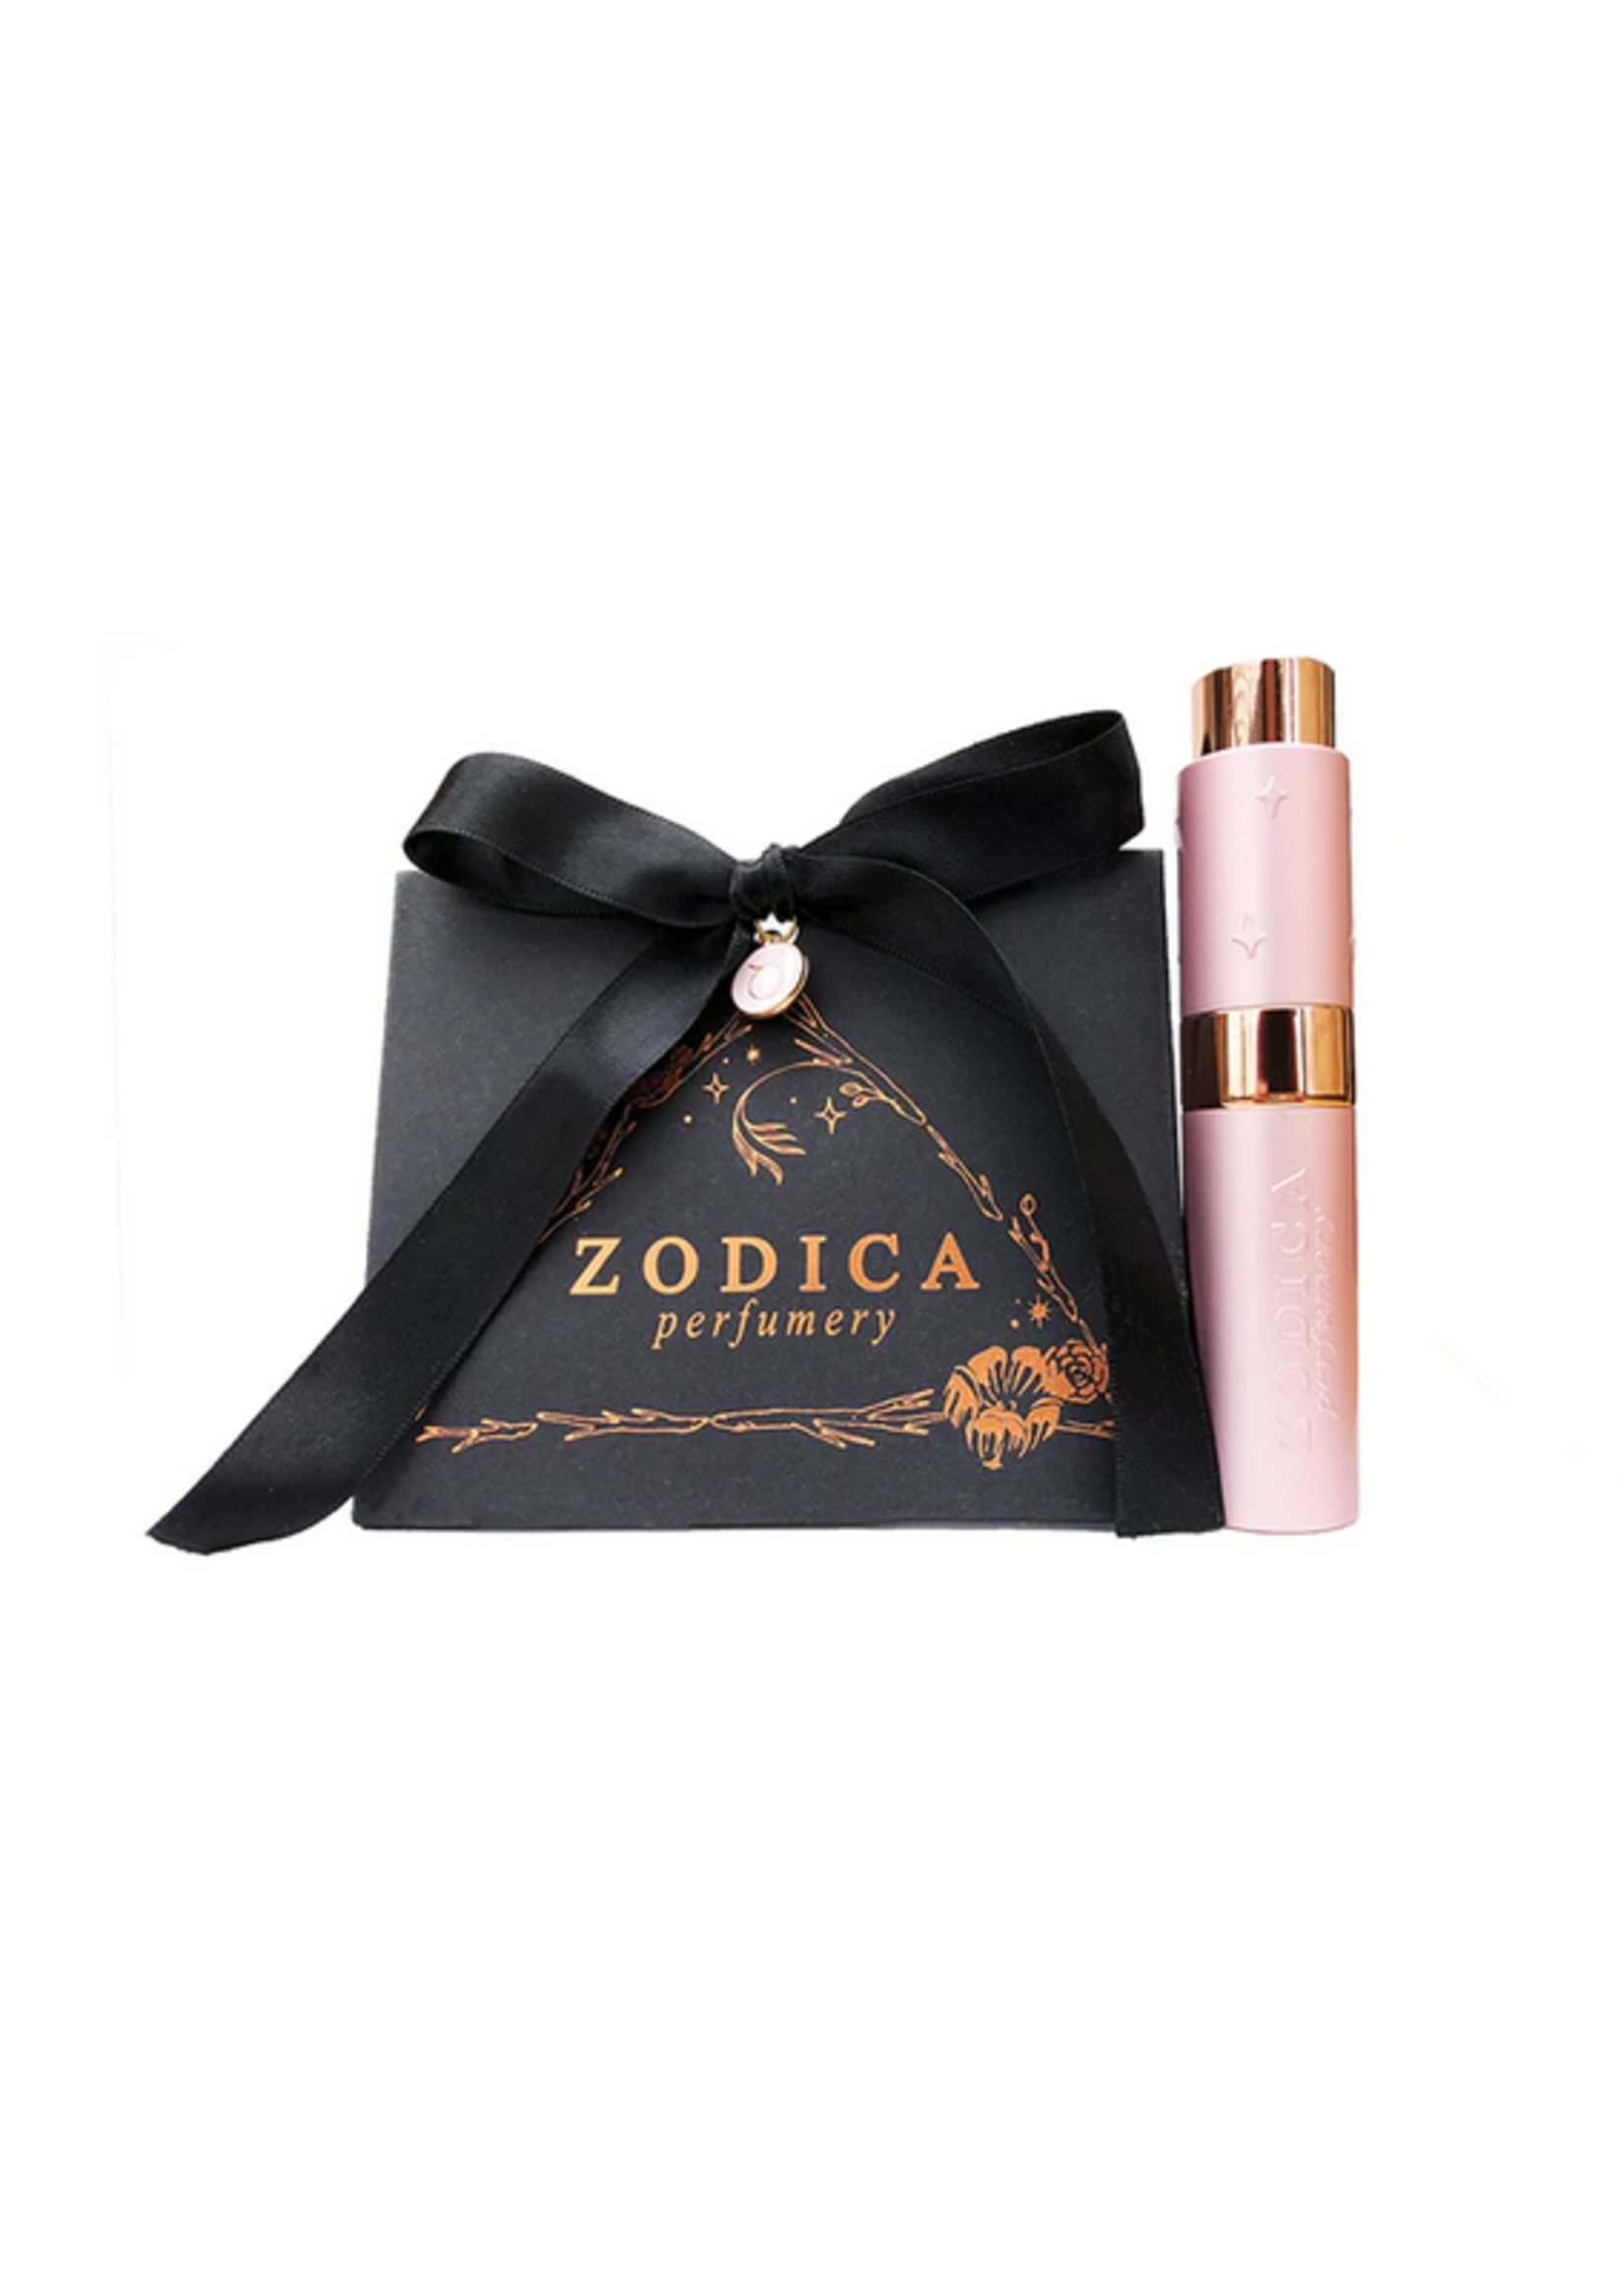 Zodica Perfume Twist & Spritz Travel Spray Gift Scorpio